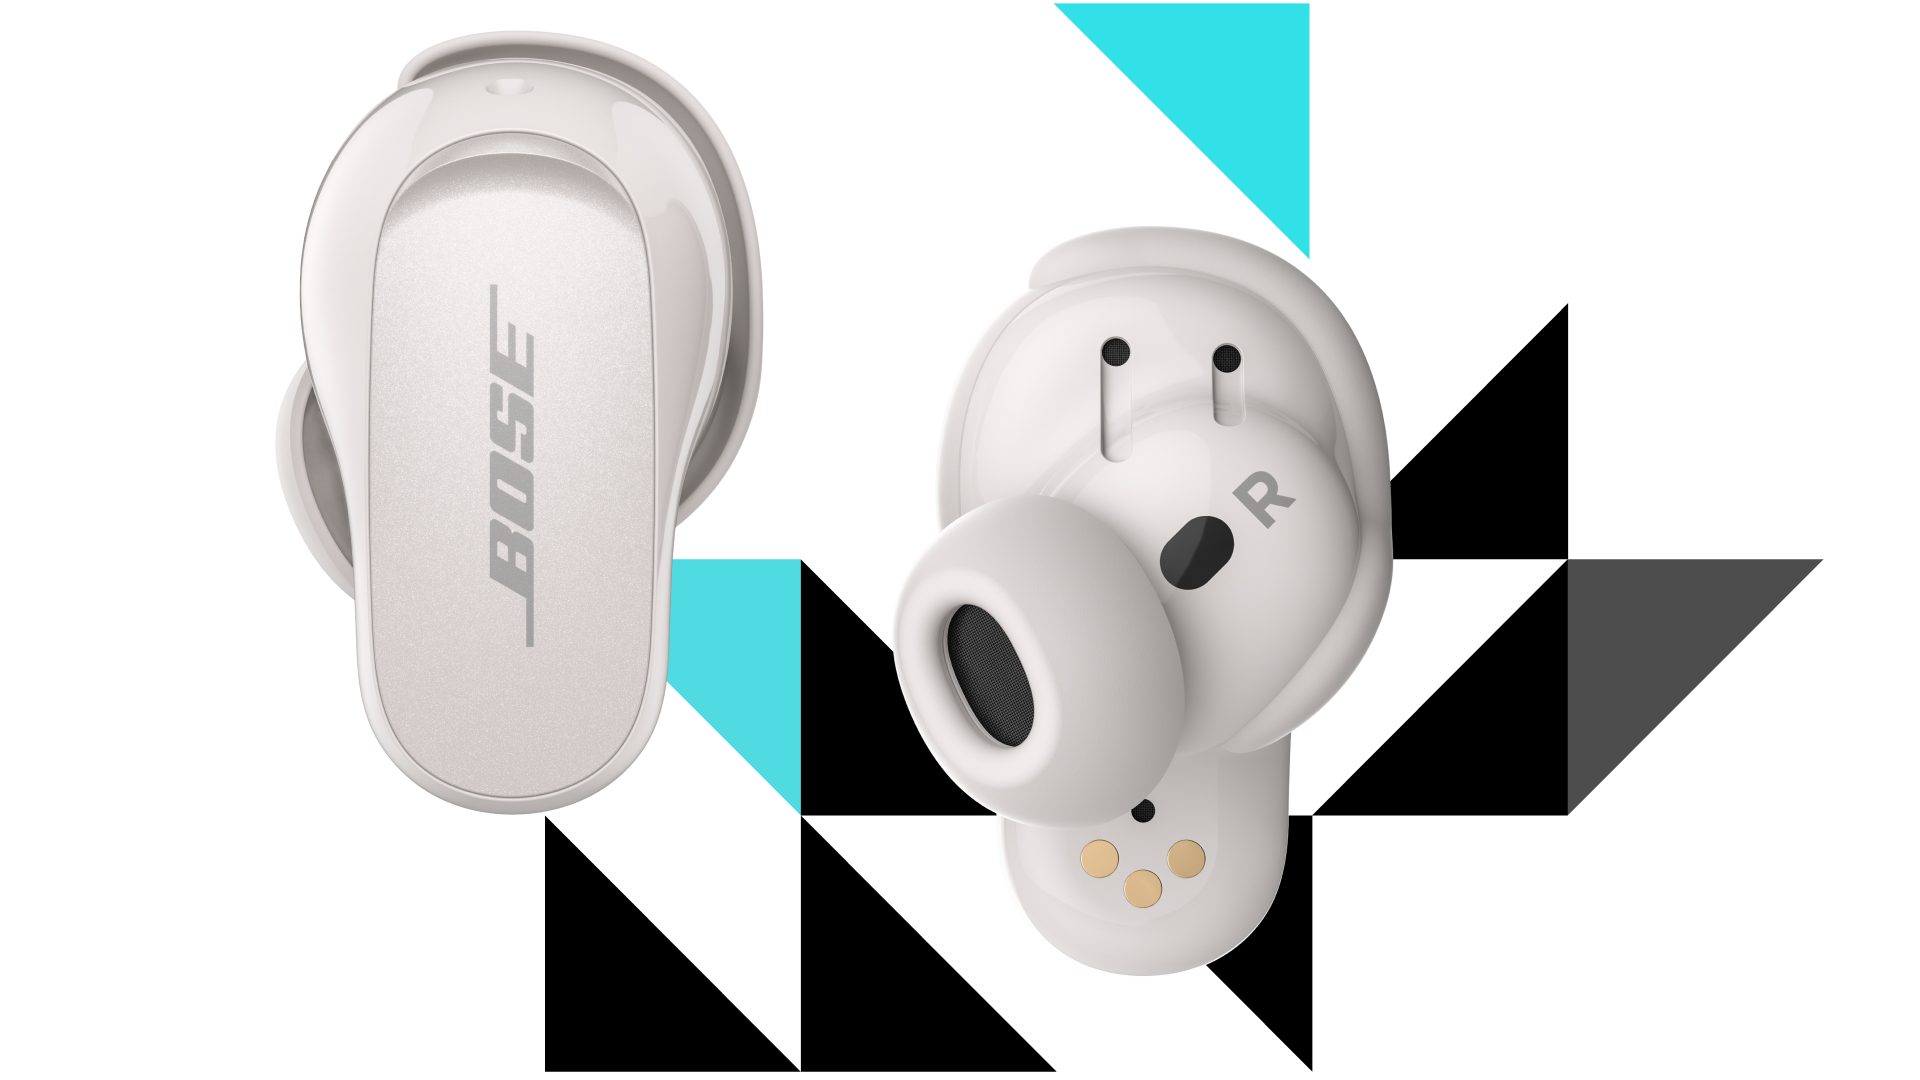 Bose ra mắt true wireless QuietComfort Earbuds II, thiết kế nhỏ gọn hơn, giá 299$